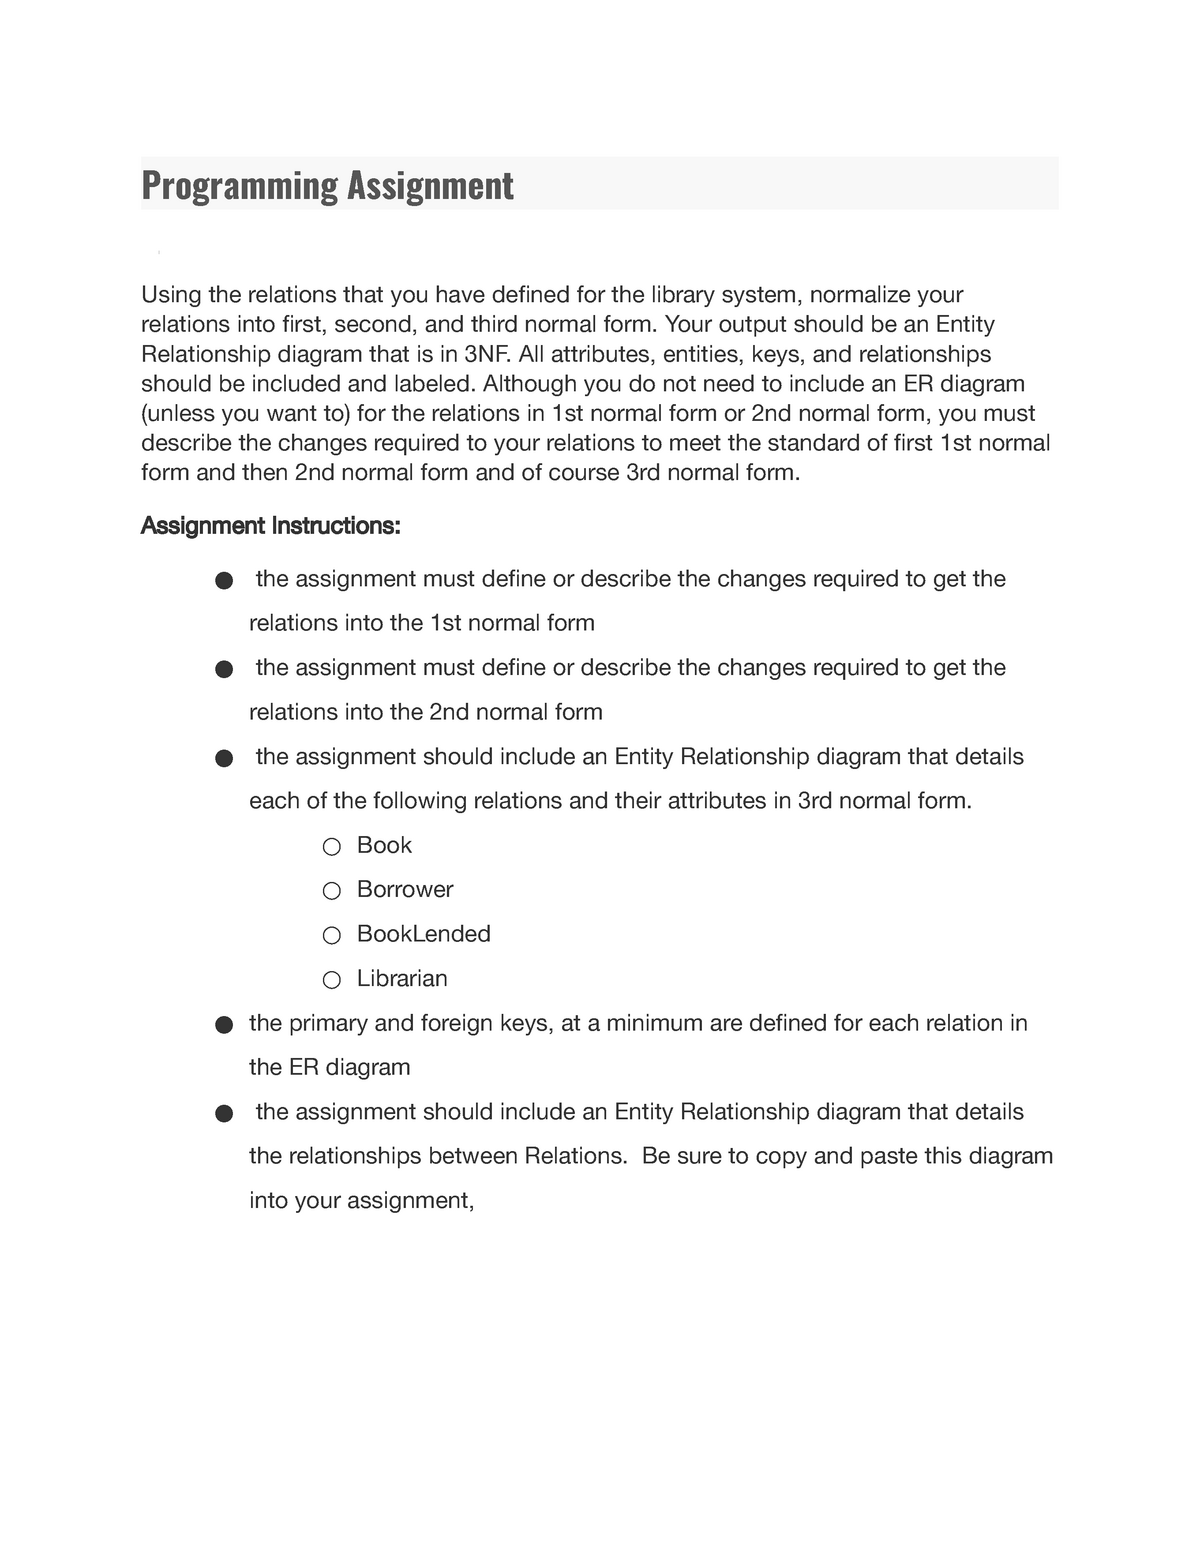 unit 4 programming assignment 1